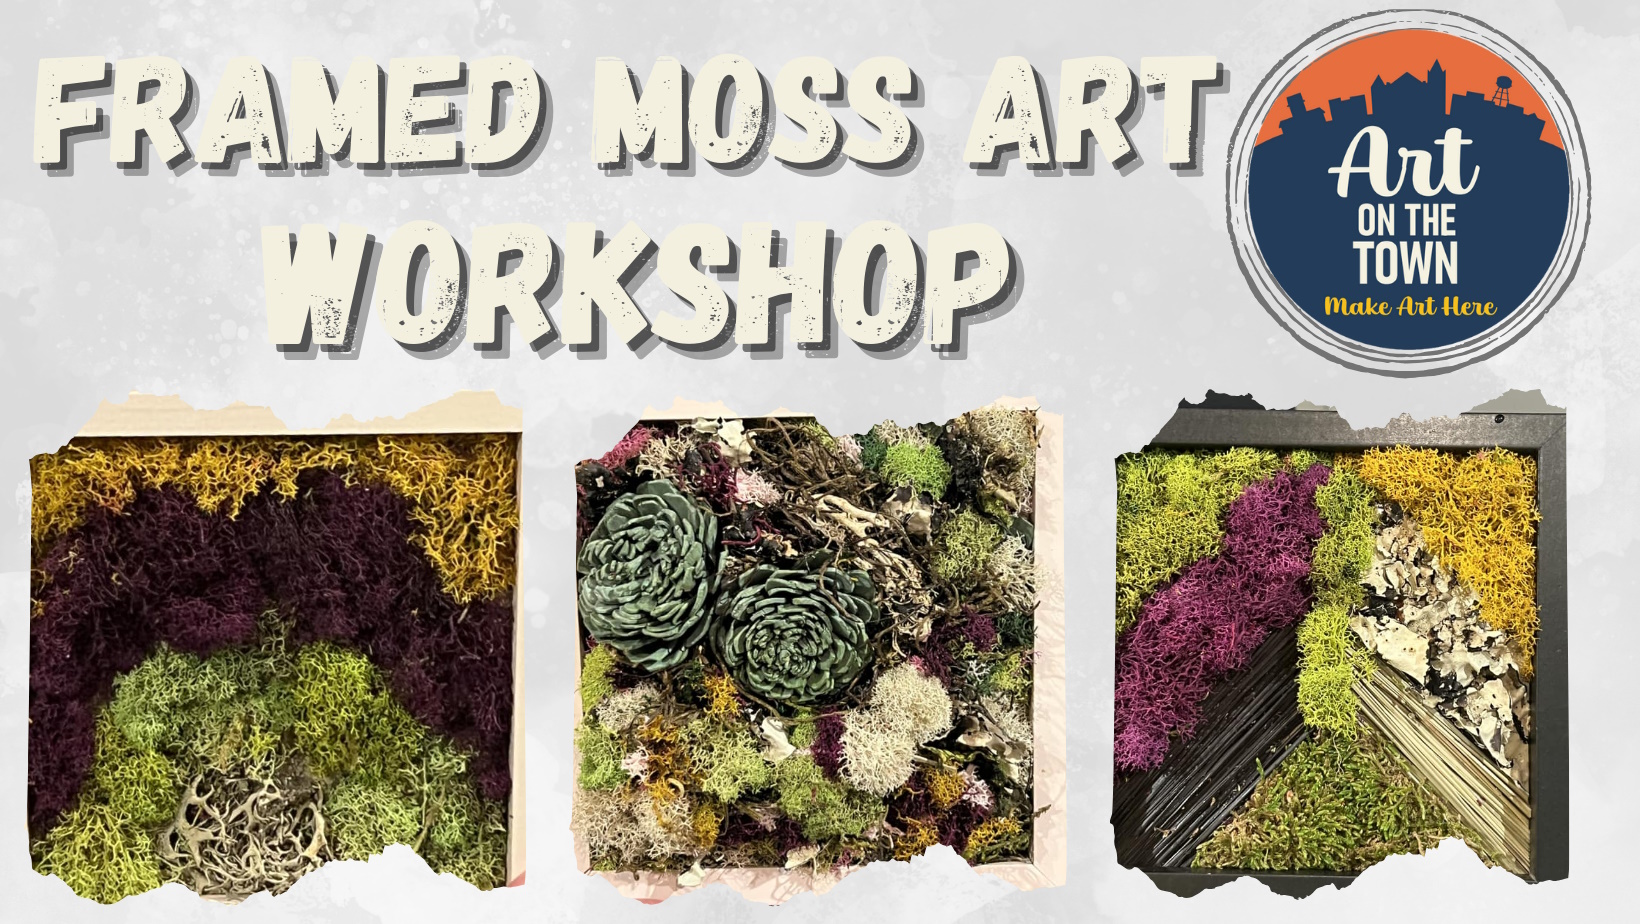 Framed Moss Art Workshop